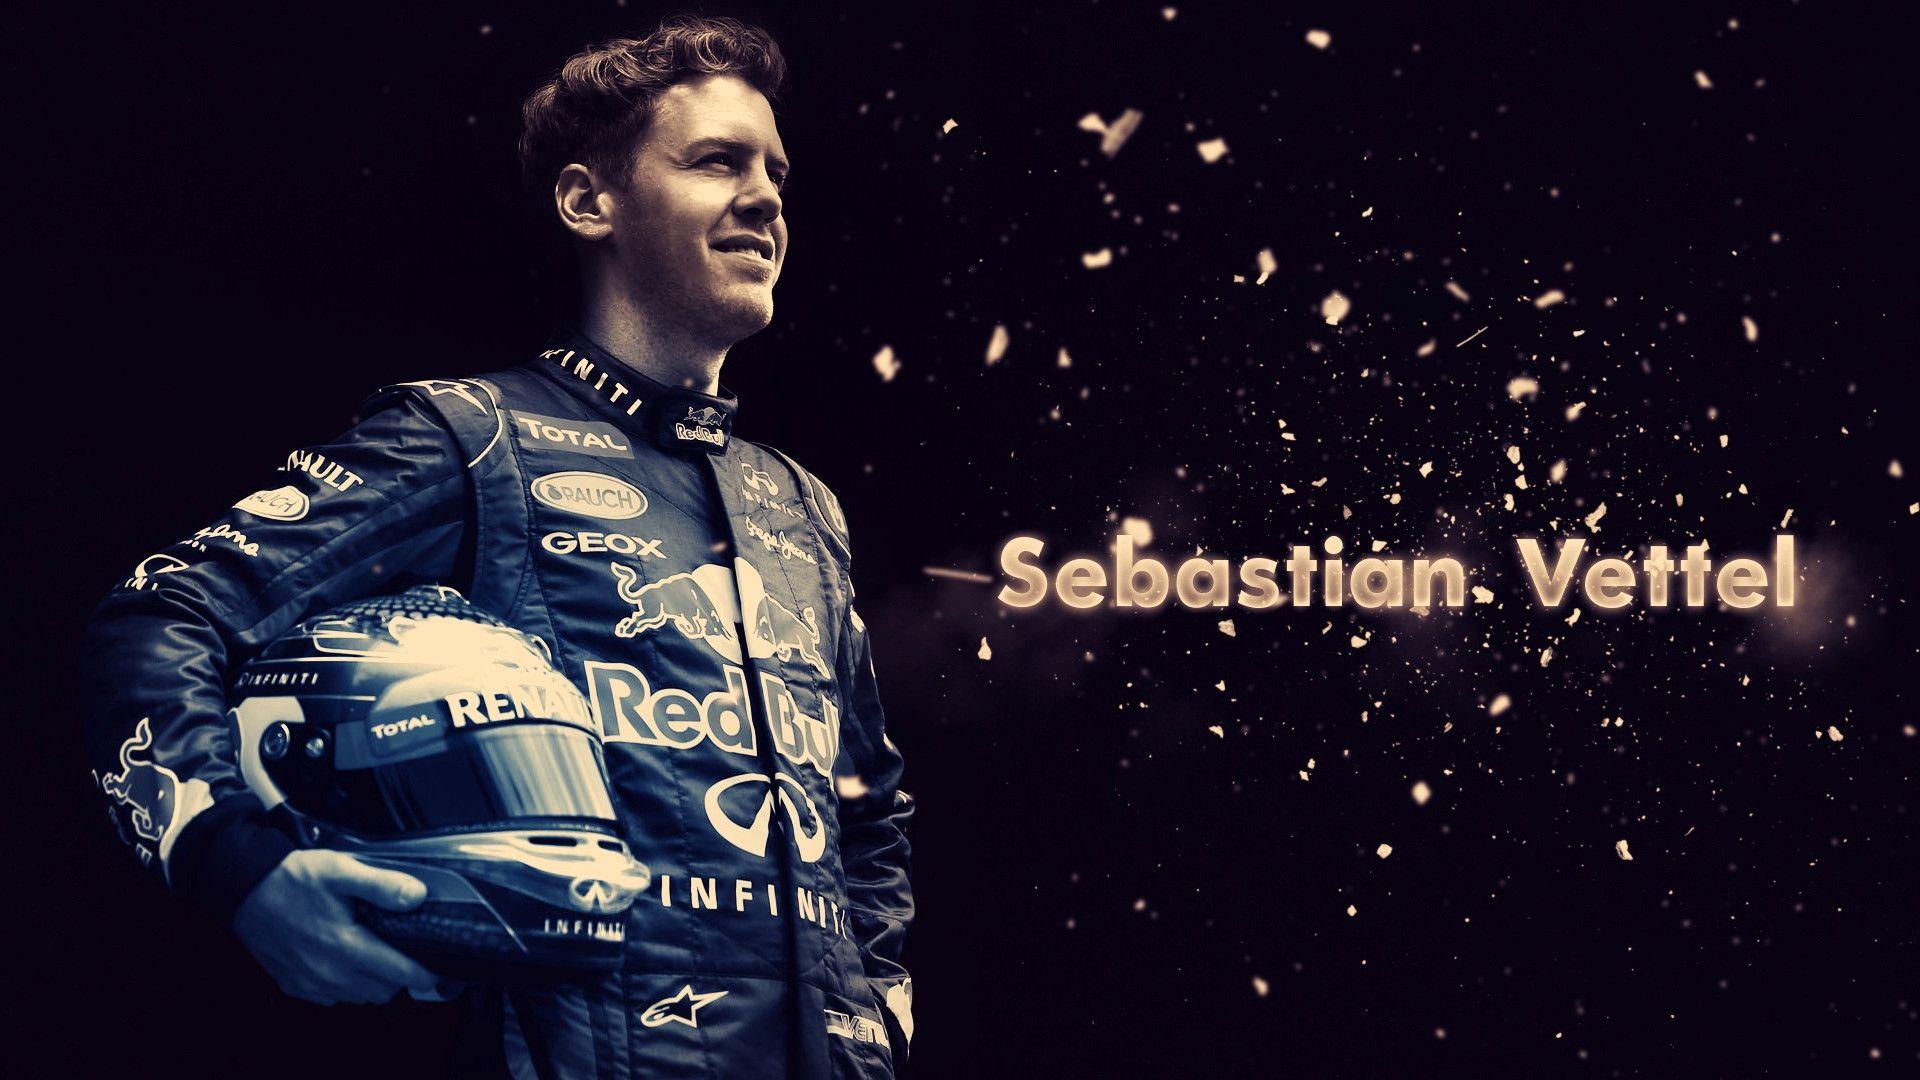 Sebastian Vettel 2014 F1 Wallpaper Wide or HD